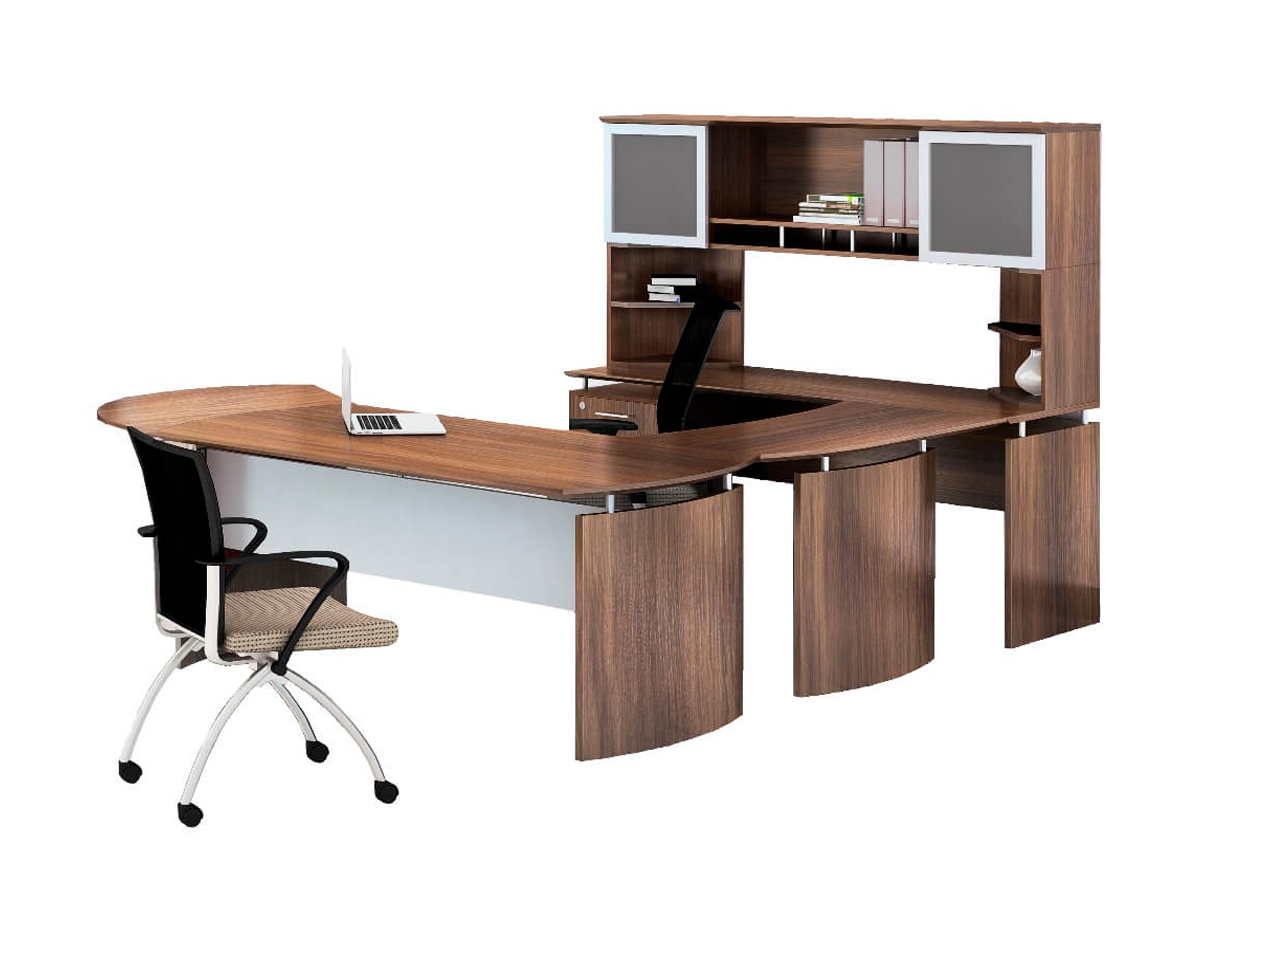 U shaped desk u shaped office furniture